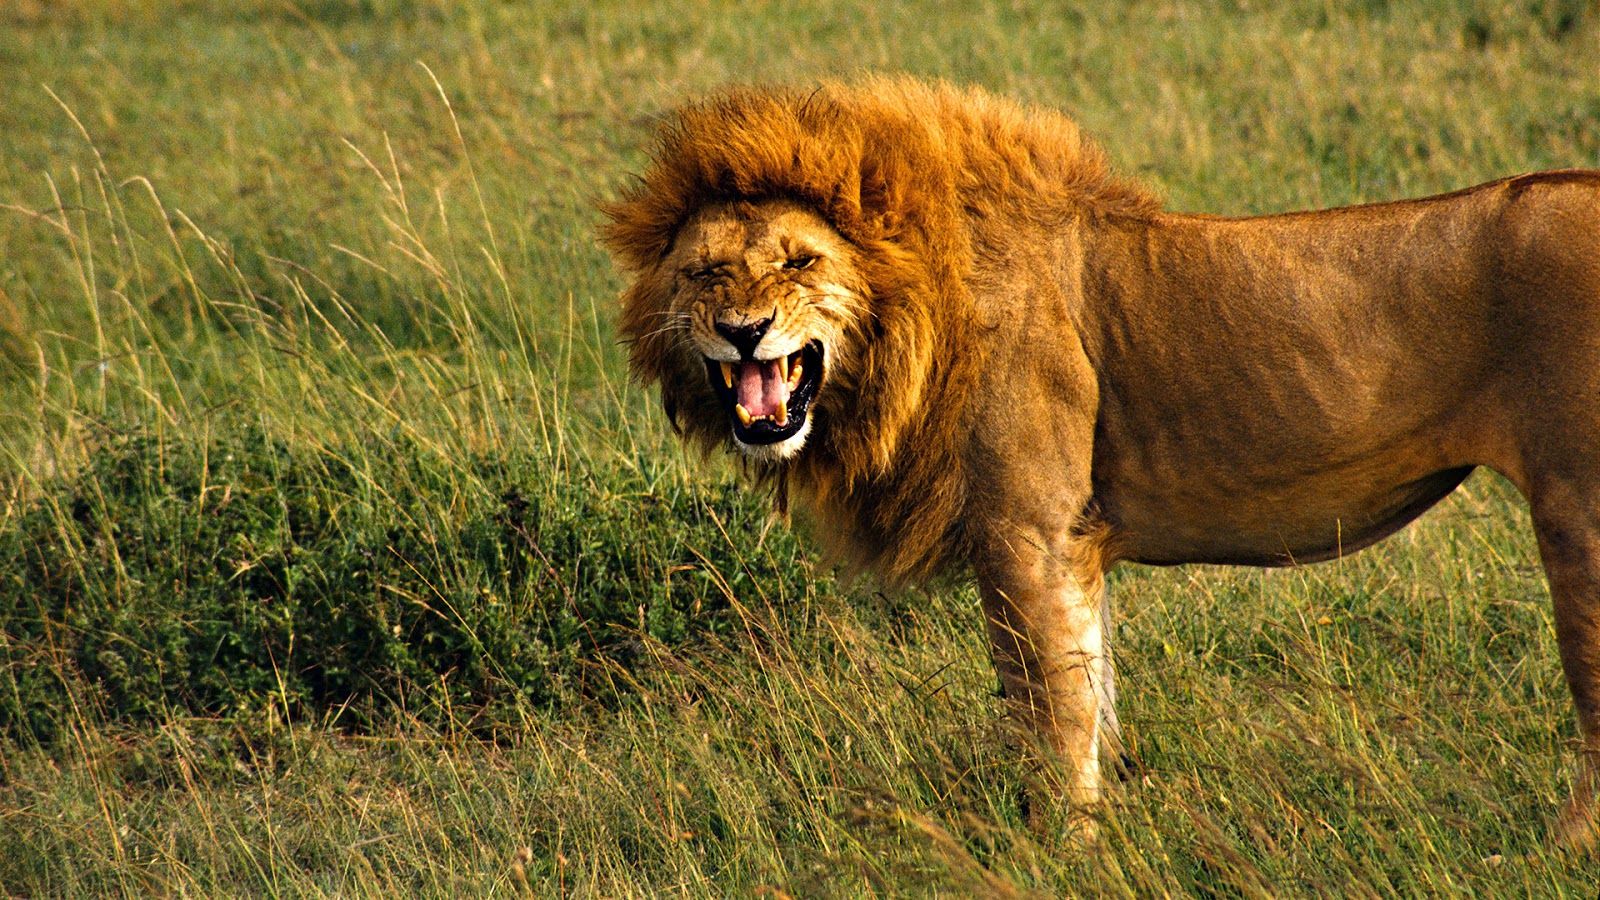 Lion in Savana African Animal Wallpaper HD, background, Free